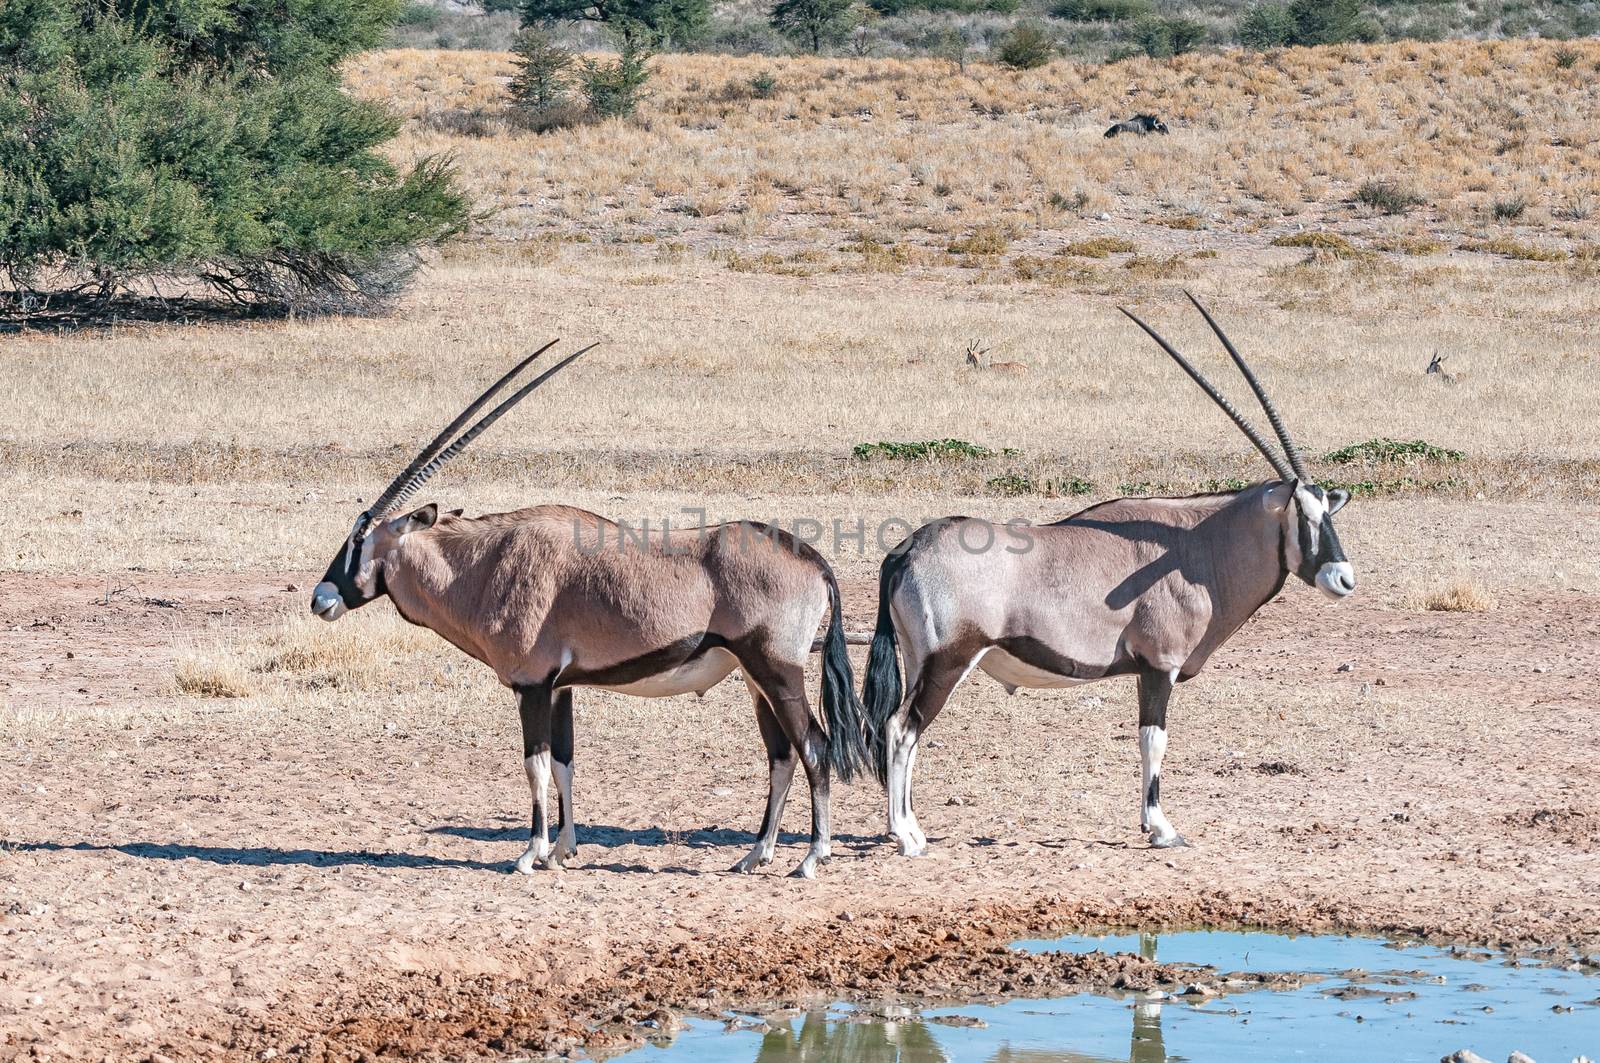 Two oryx at a waterhole in the arid Kgalagadi